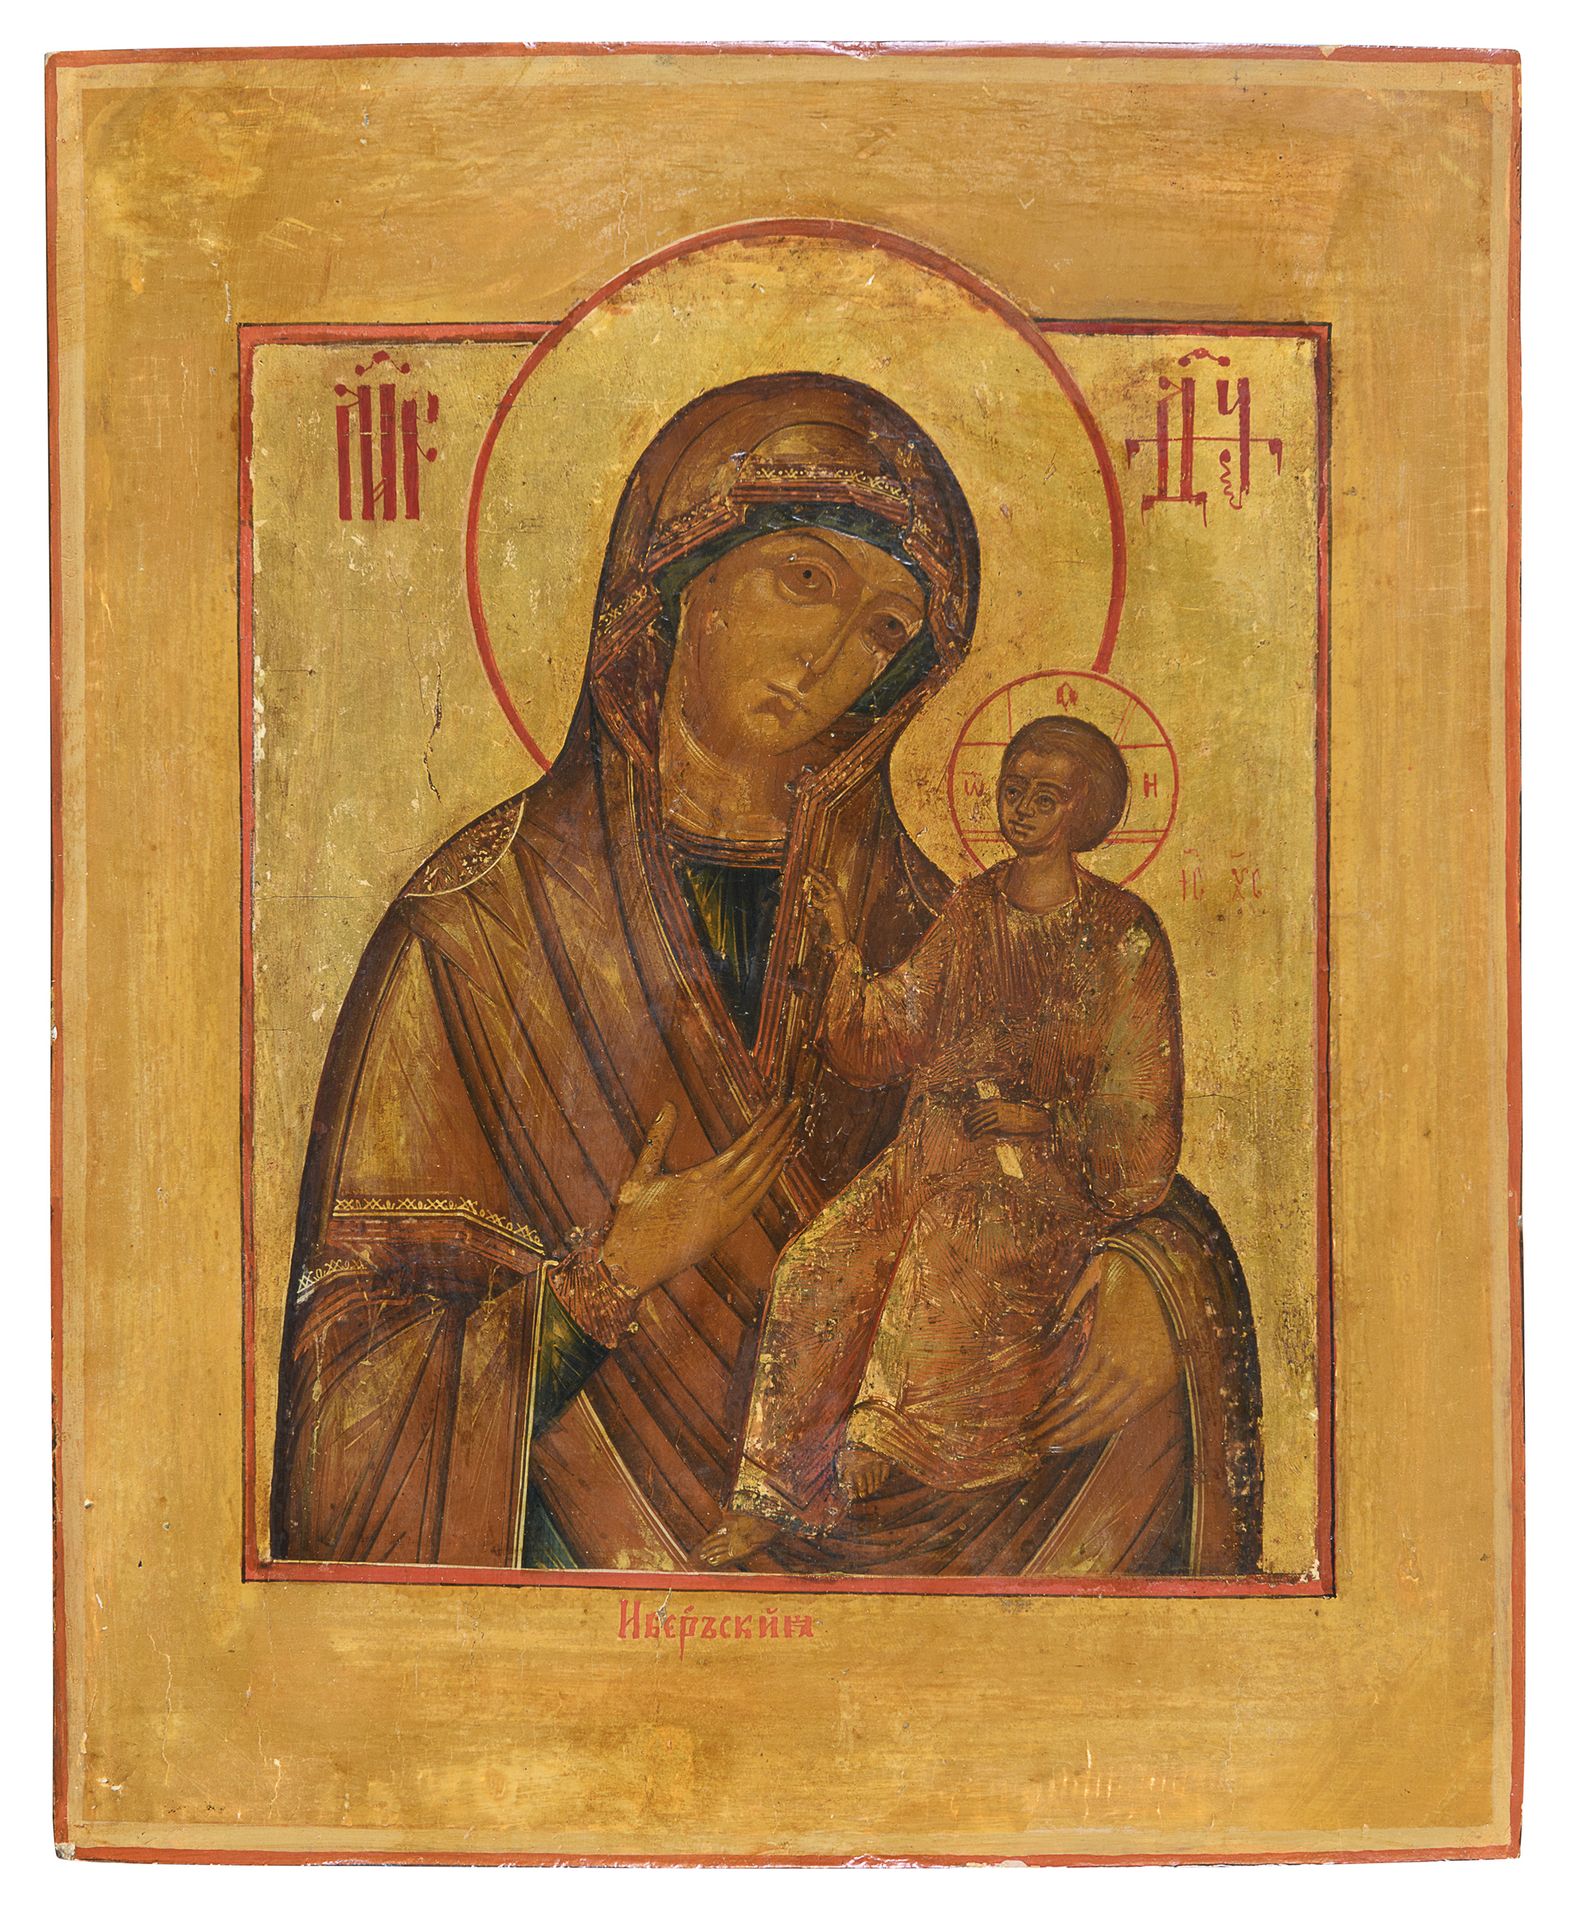 Null 俄罗斯中部的画家，18世纪末



伊维尔斯卡娅的圣母

金地蛋彩画像，34.5 x 28厘米。



画的状况

沿着边界和数字扩散的日期修复